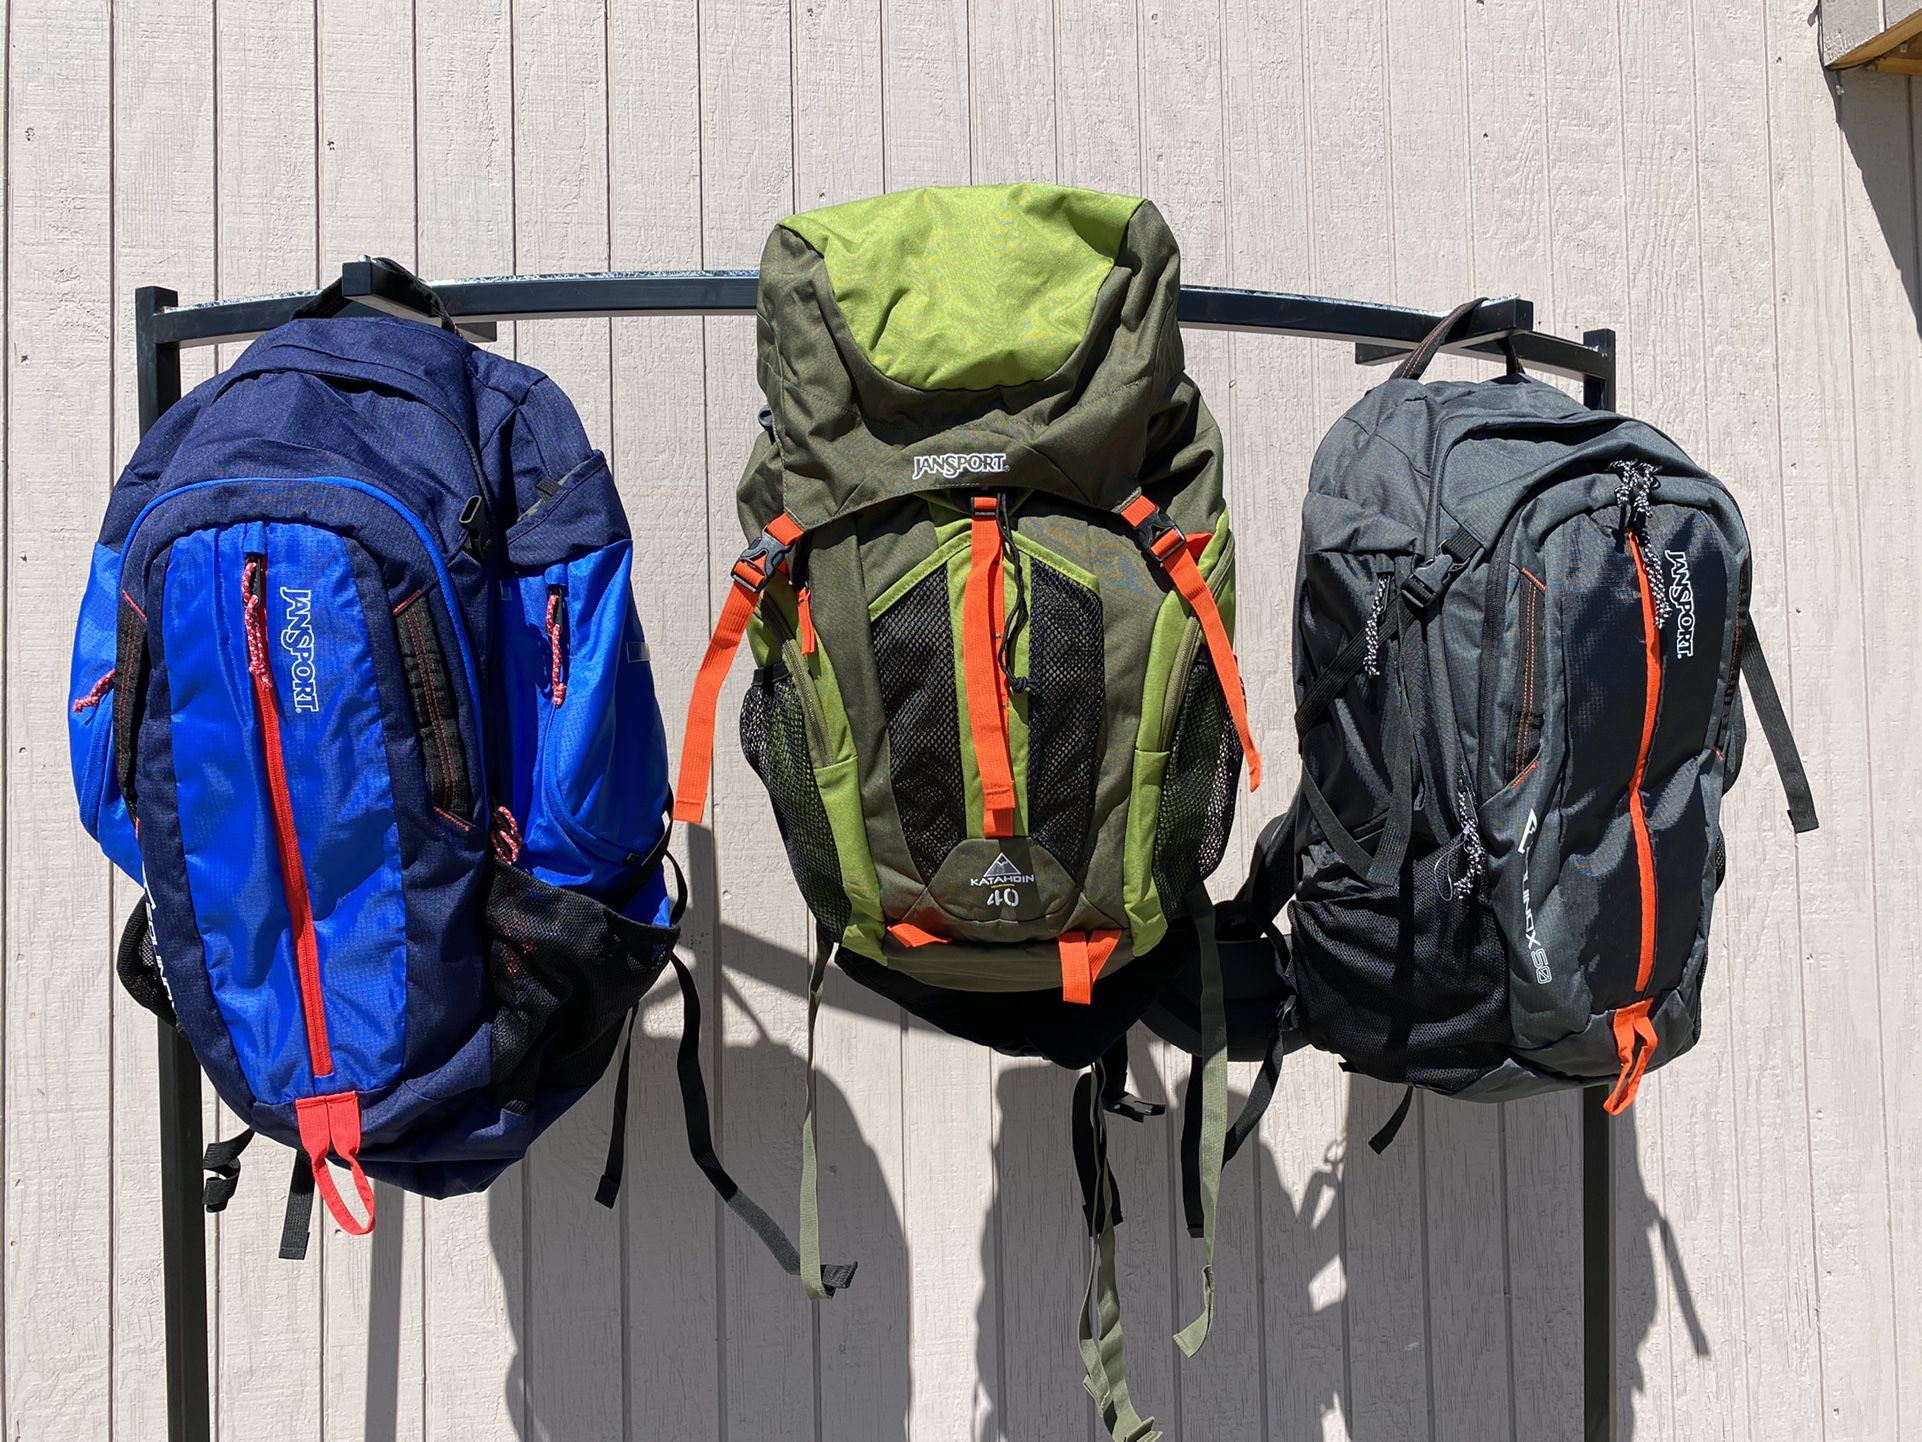 New Jansport Hiking / Traveling Backpacks!